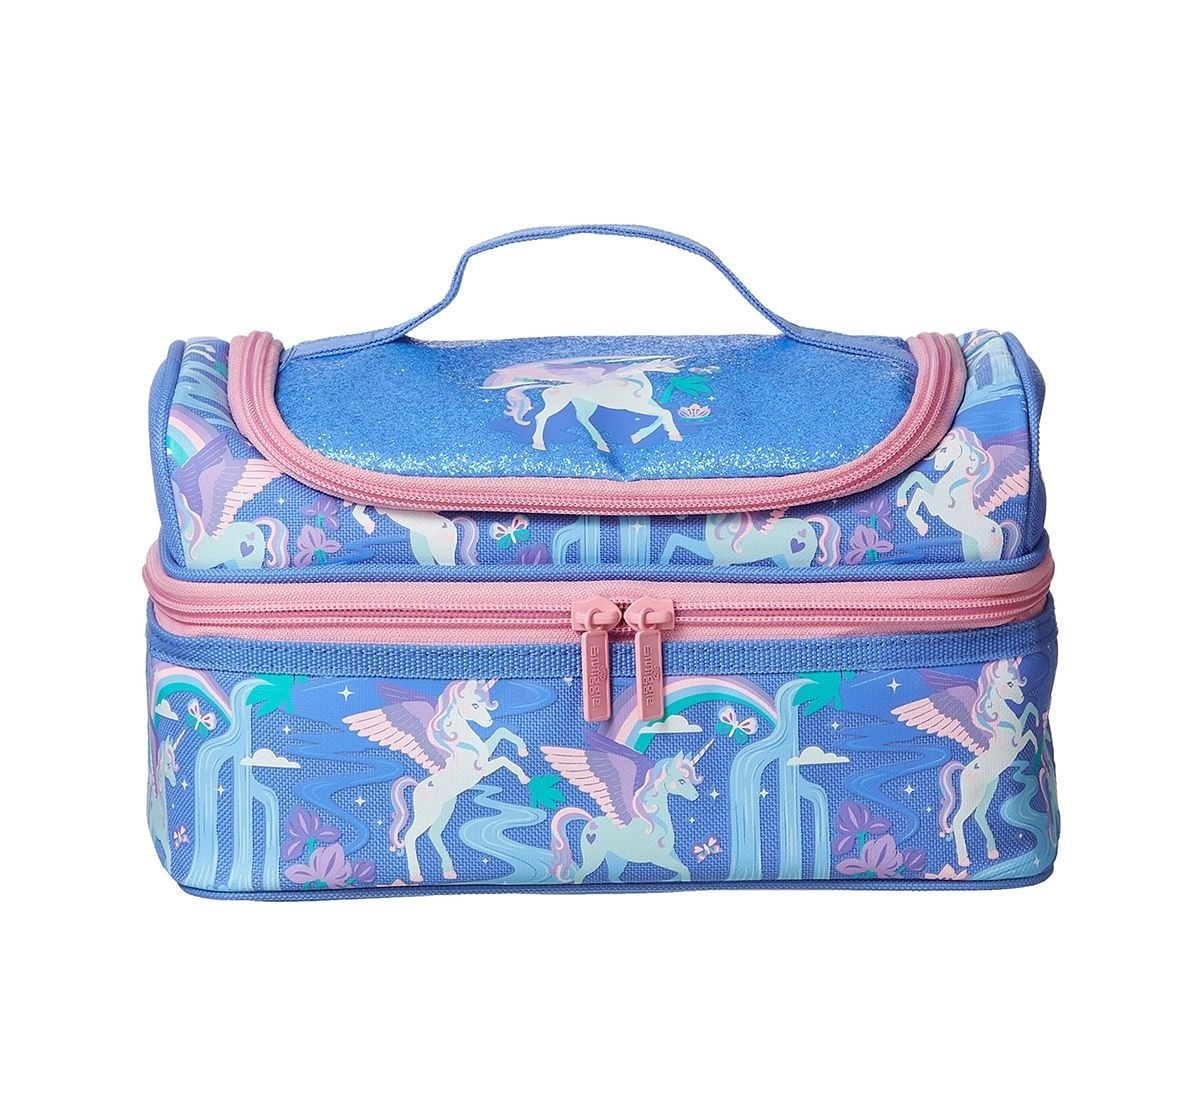 Smiggle Far Away Double Decker Lunchbox - Unicorn Print Bags for Kids age 3Y+ (Cornflower Blue)